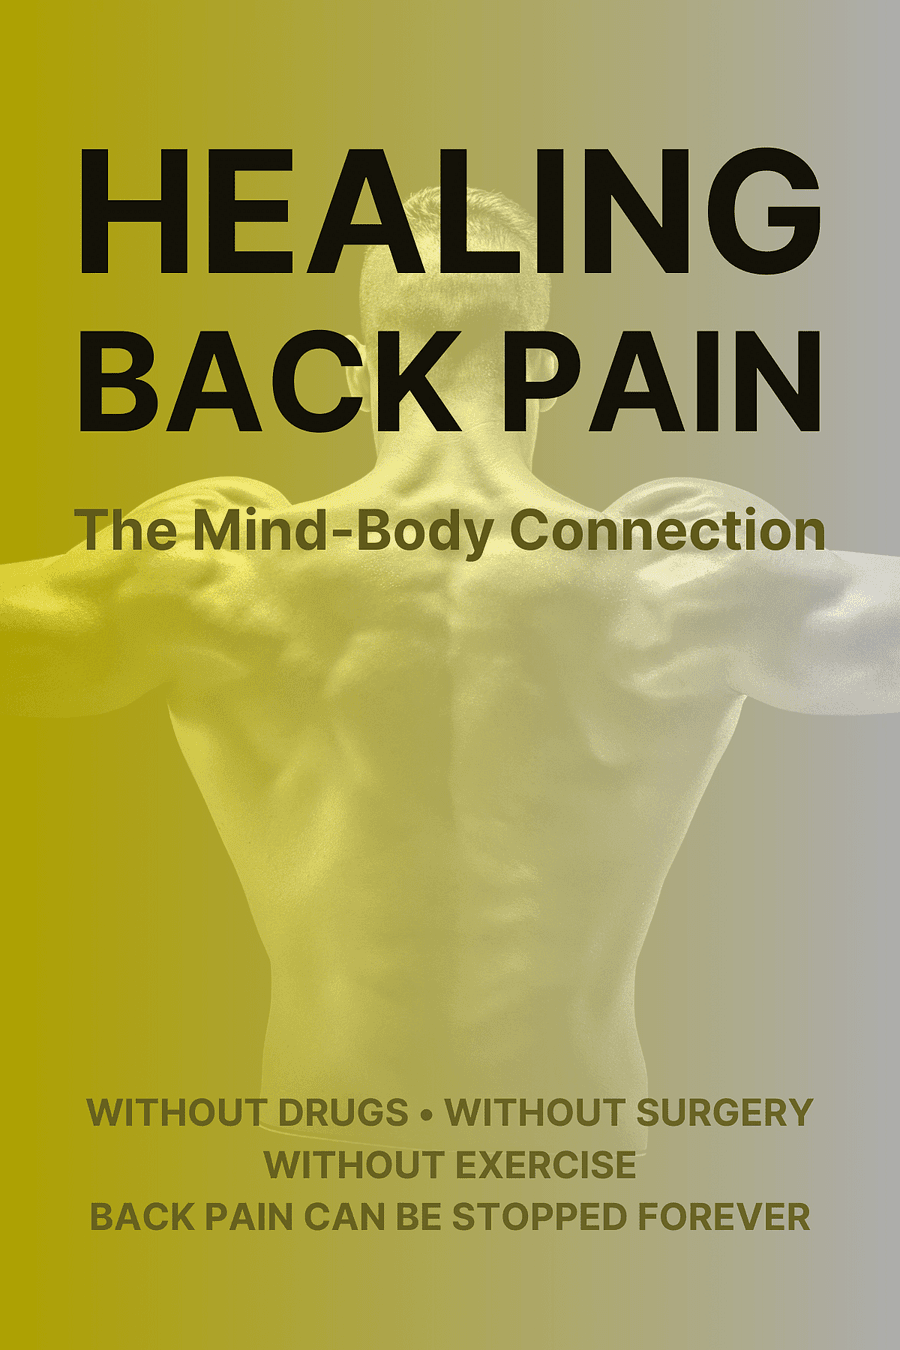 Healing Back Pain by Dr. John E. Sarno MD - Book Summary